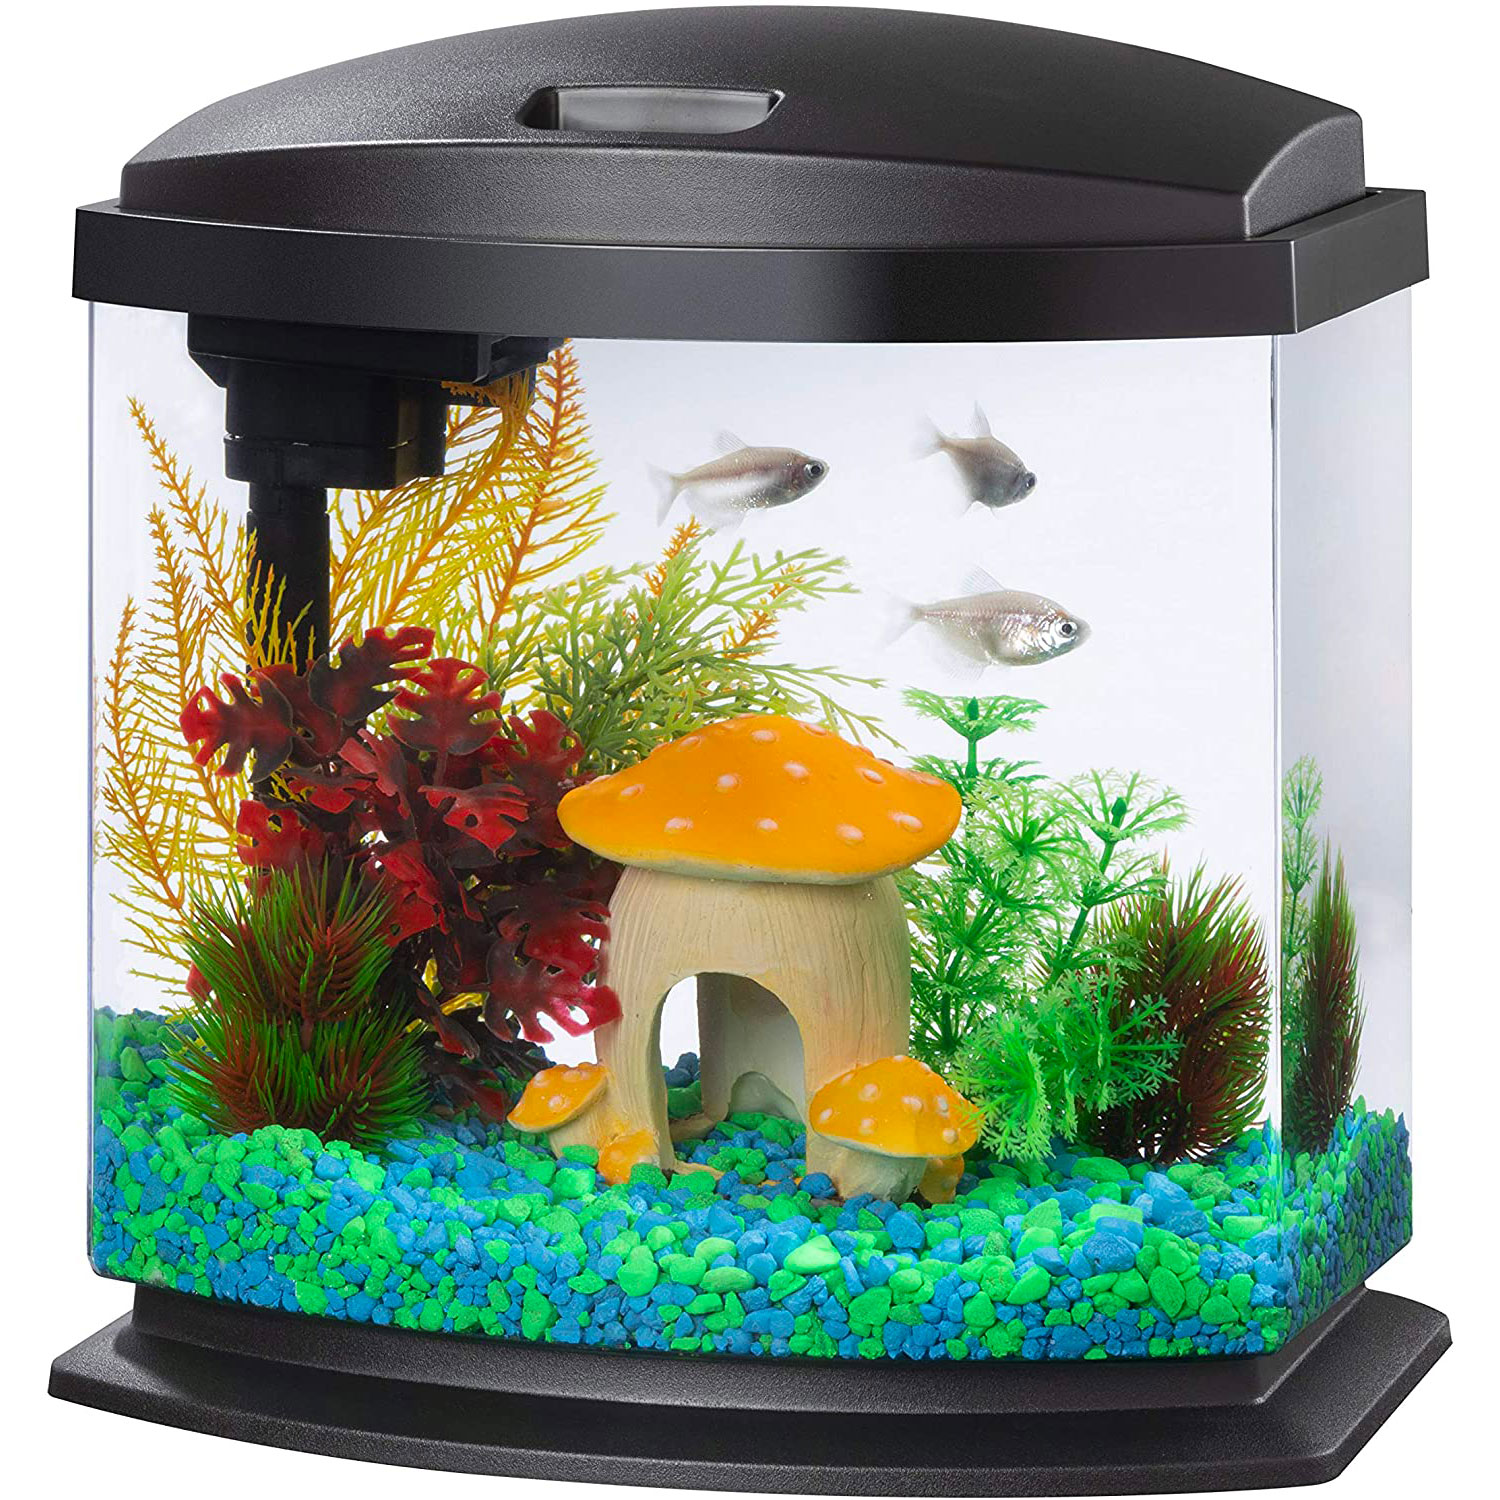 verkwistend Sta op dichters Aqueon LED 2.5 Gallon MiniBow SmartClean Fish Aquarium Kit